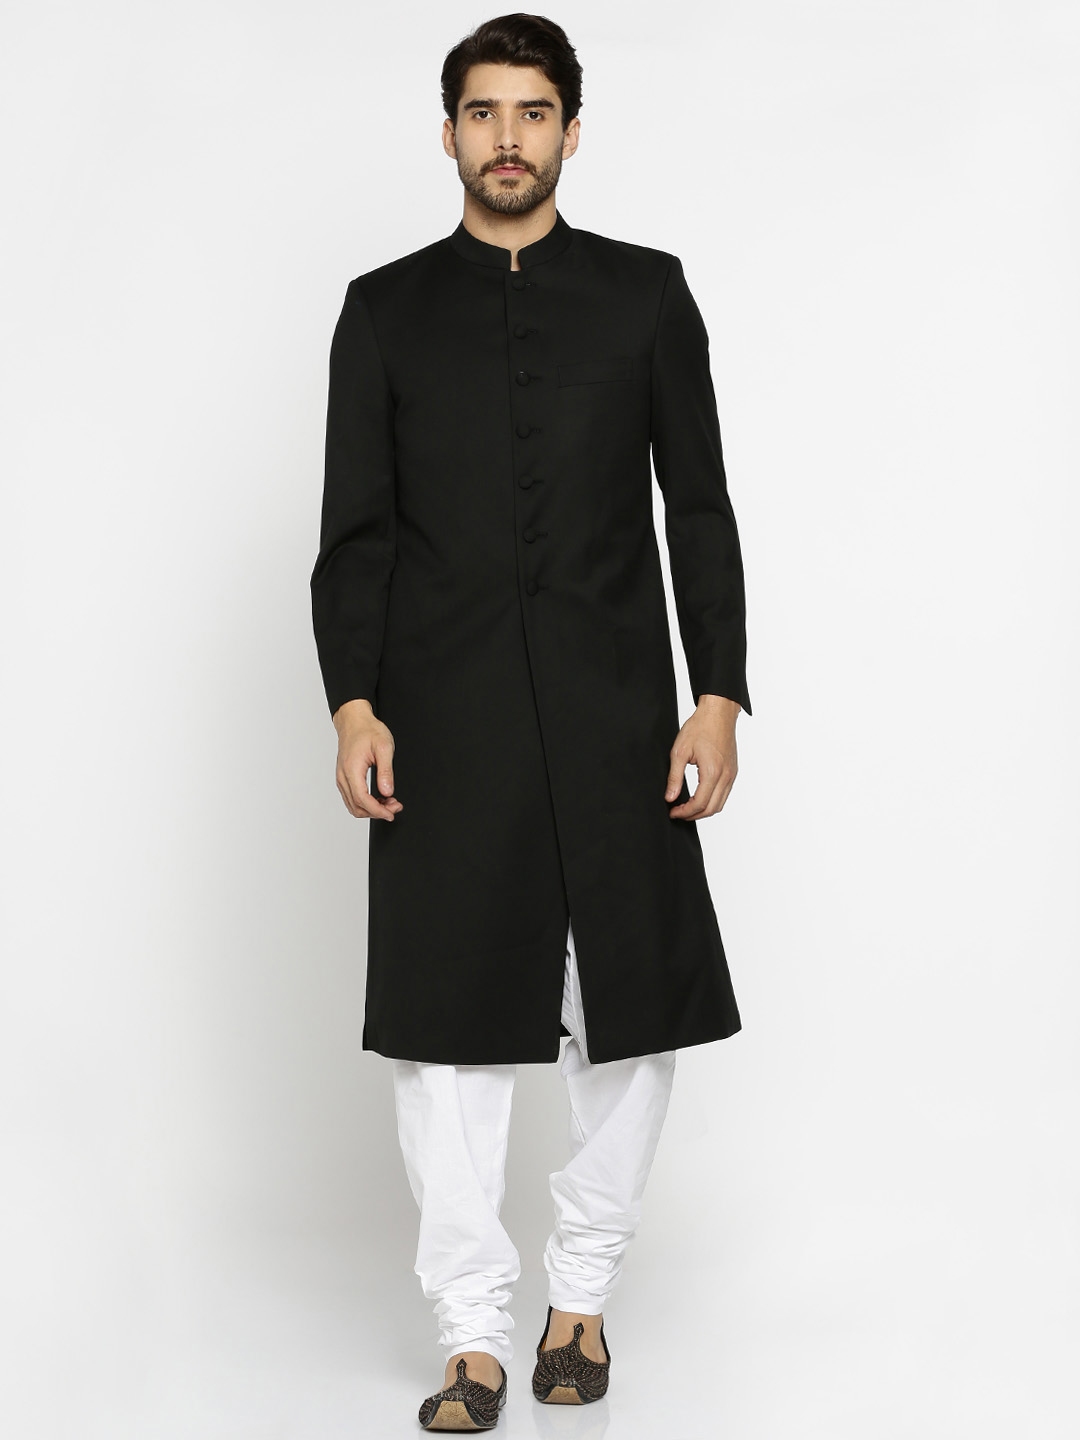 Buy SUITLTD Black & White Solid Sherwani - Sherwani for Men 2162132 ...